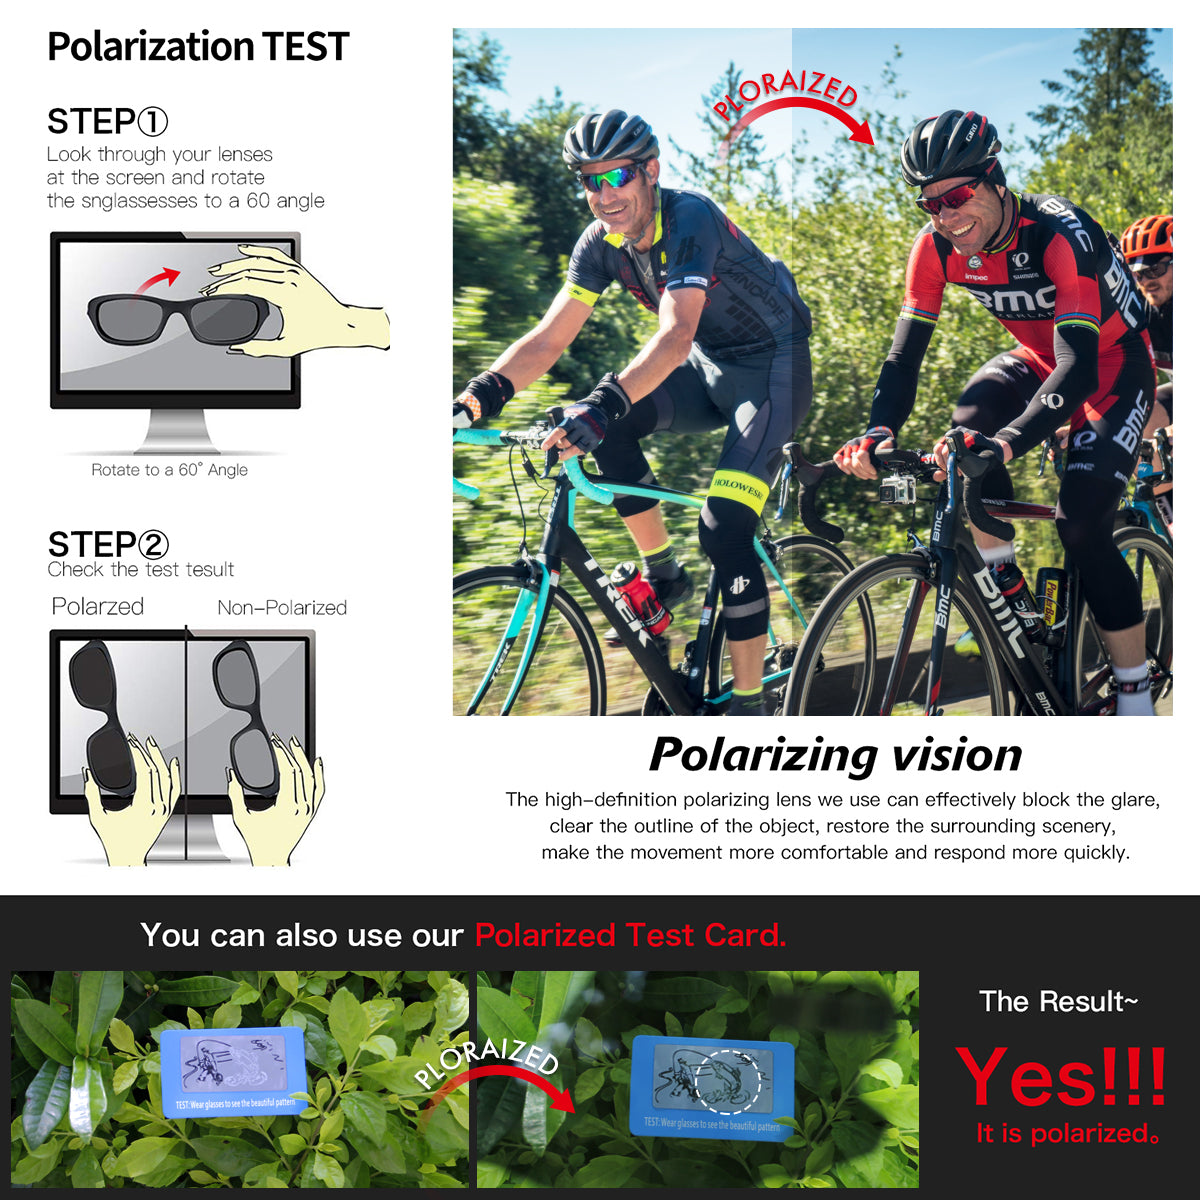 <transcy>QE51 Gafas de ciclismo coloridas rojas UV400 Gafas de sol de bicicleta 1 lente polarizada 3 HD</transcy>